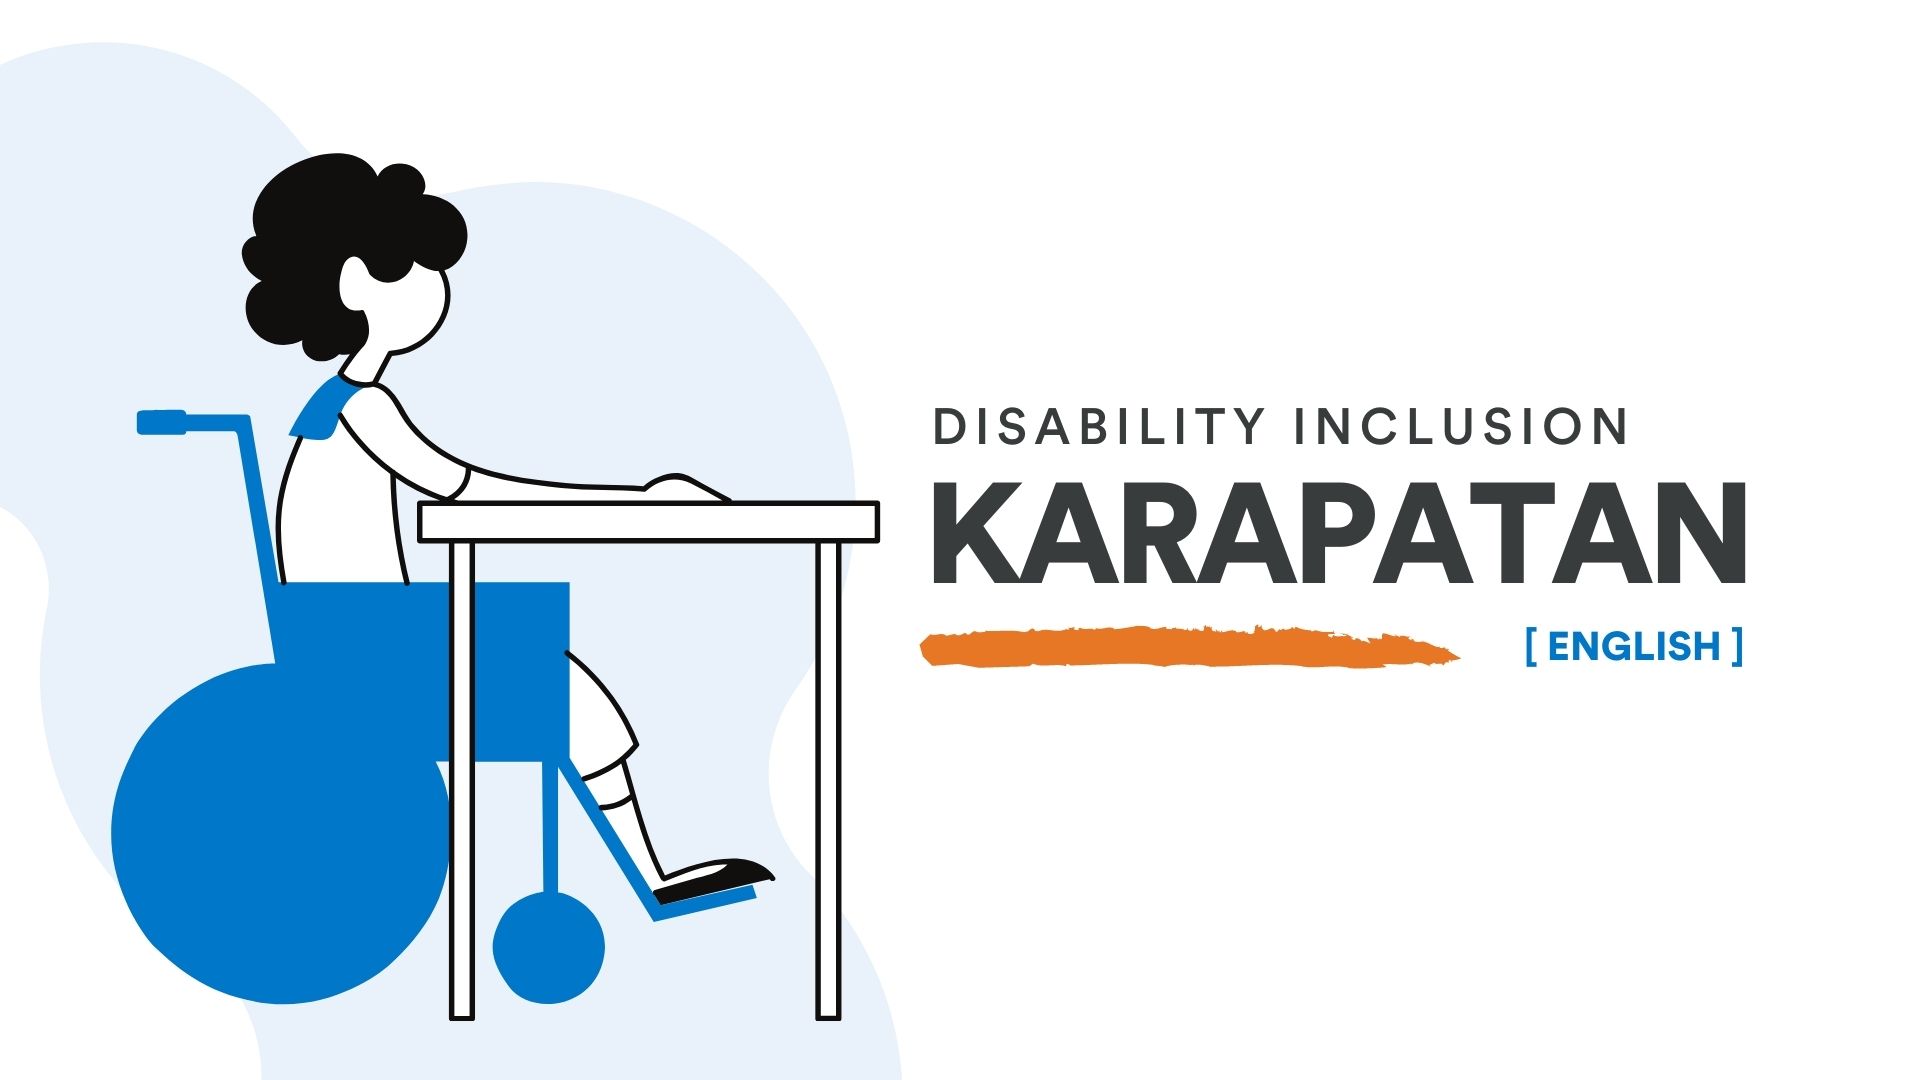 Karapatan: Disability Inclusion [English]